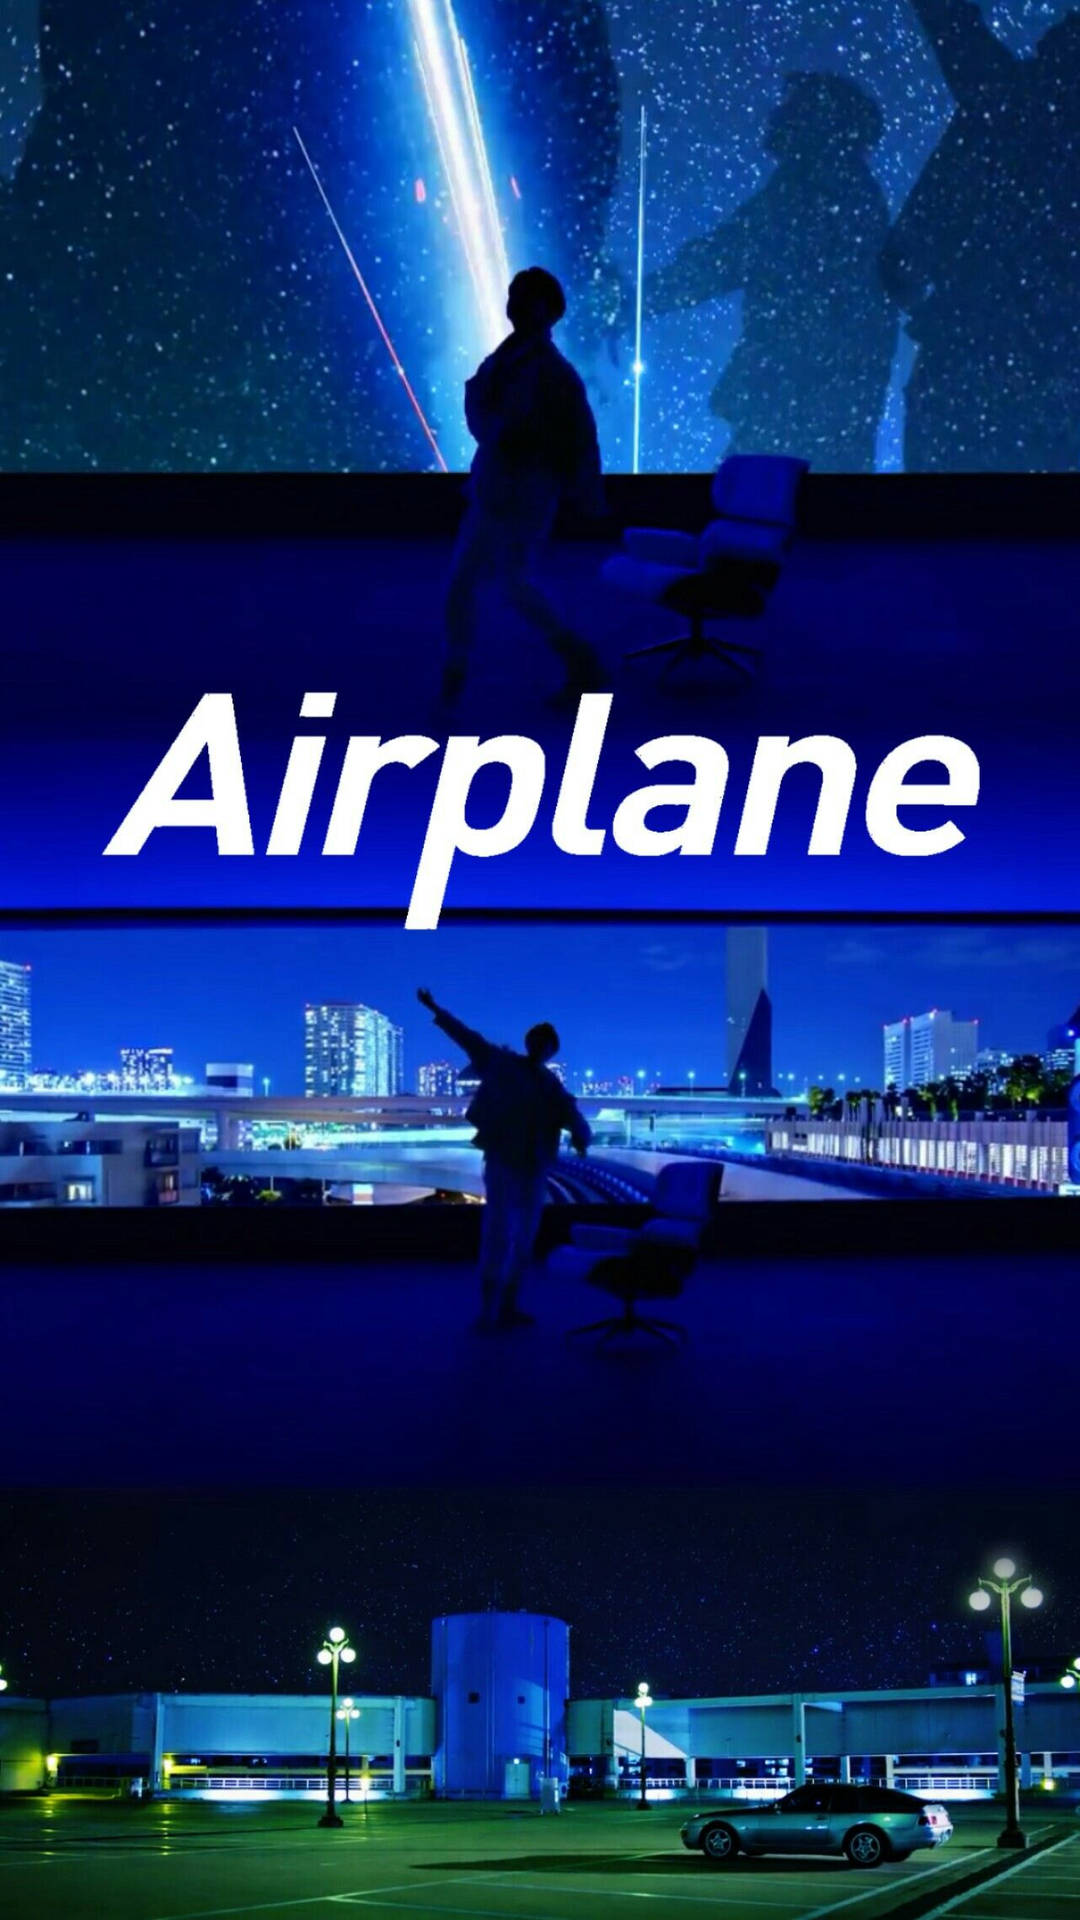 Bts J-hope Airplane Background